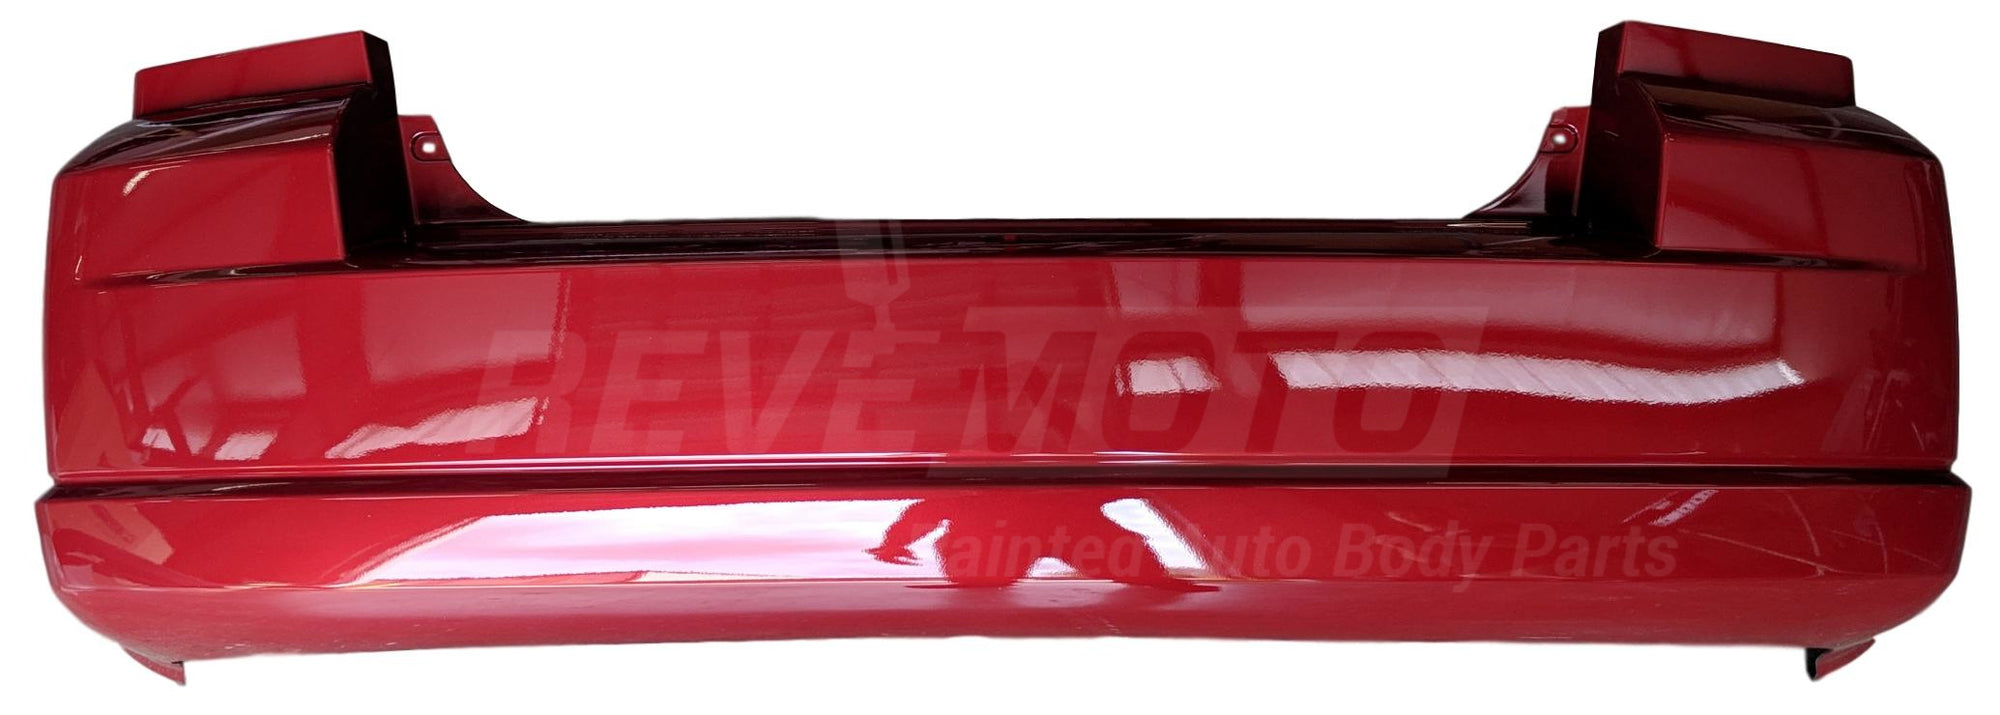 2008 Dodge Caliber : Rear Bumper Painted